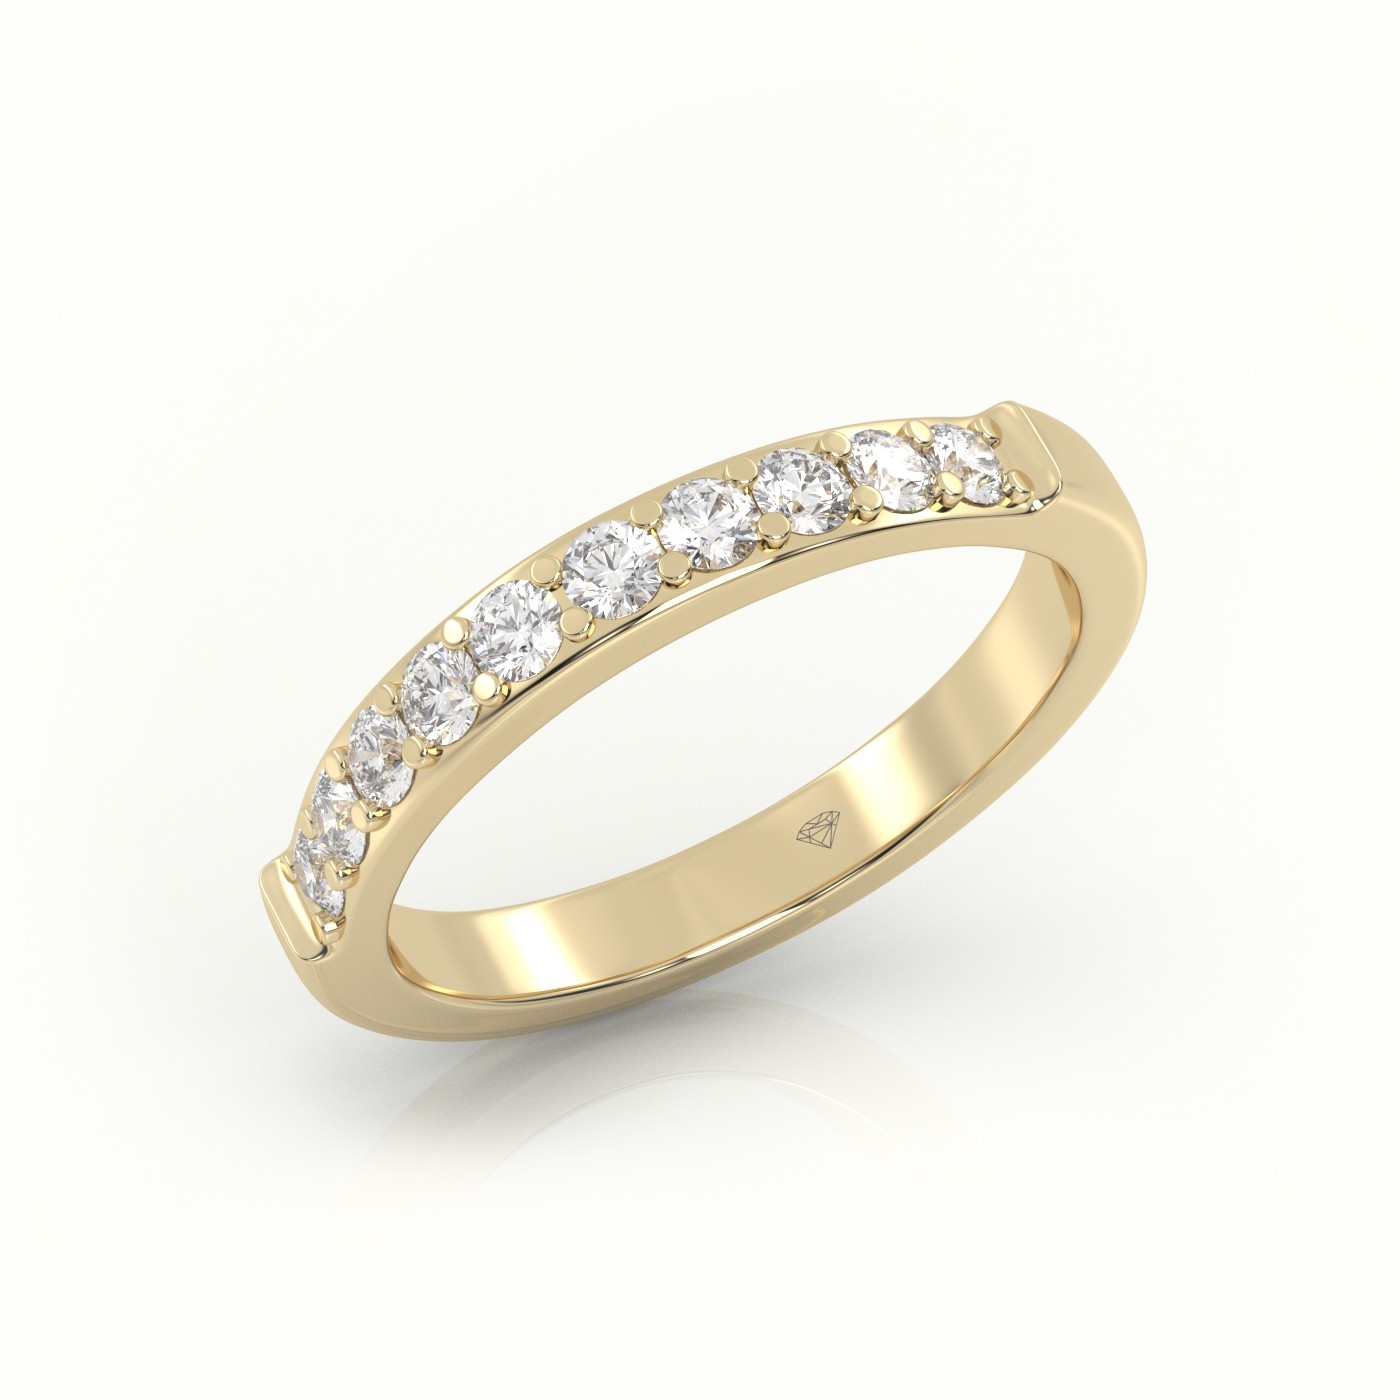 18k yellow gold  round diamonds shared prongs half eternity wedding band Photos & images